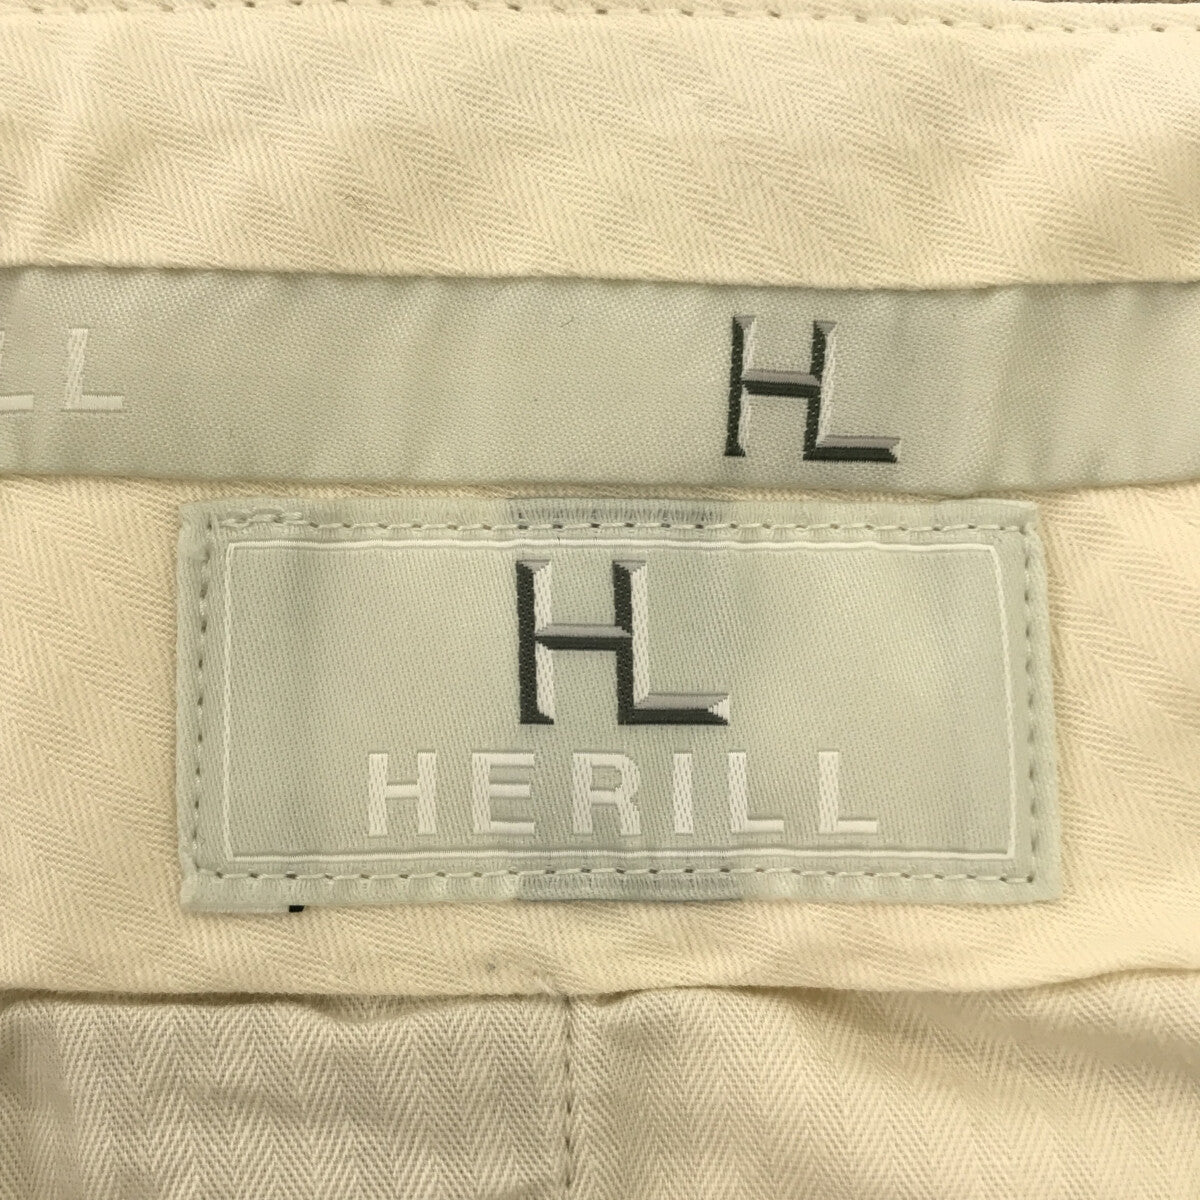 HERILL / ヘリル | 2020AW | CASHMERE CHINO PANTS コットン カシミヤ 2タック チノパンツ | 1 |